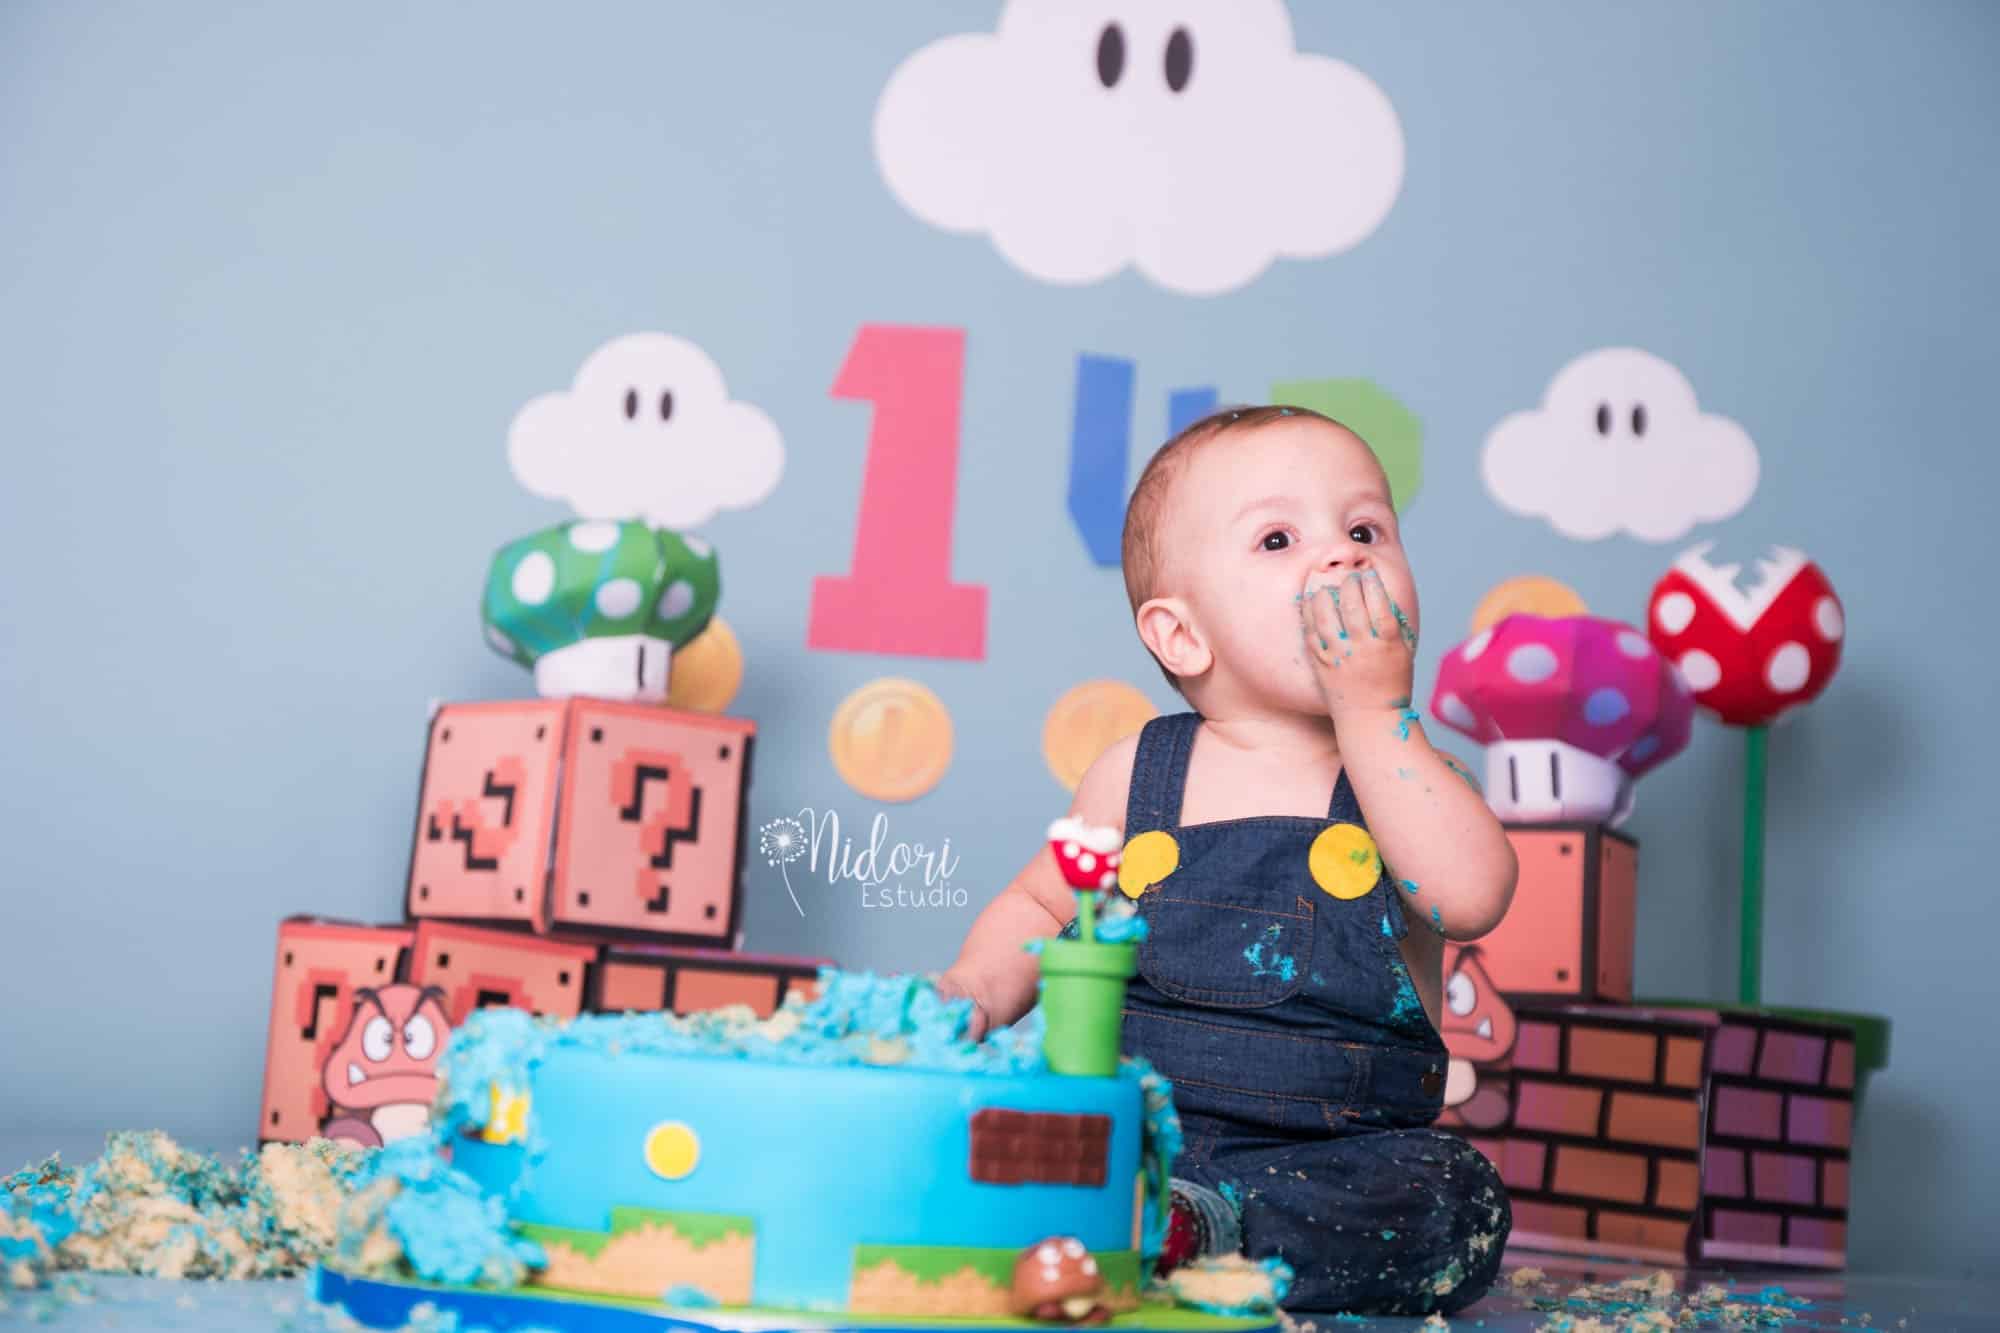 smash-cake-cumpleaños-tarta-fotografia-niños-bebes-nidoriestudio-fotos-valencia-almazora-castellon-españa-spain-05